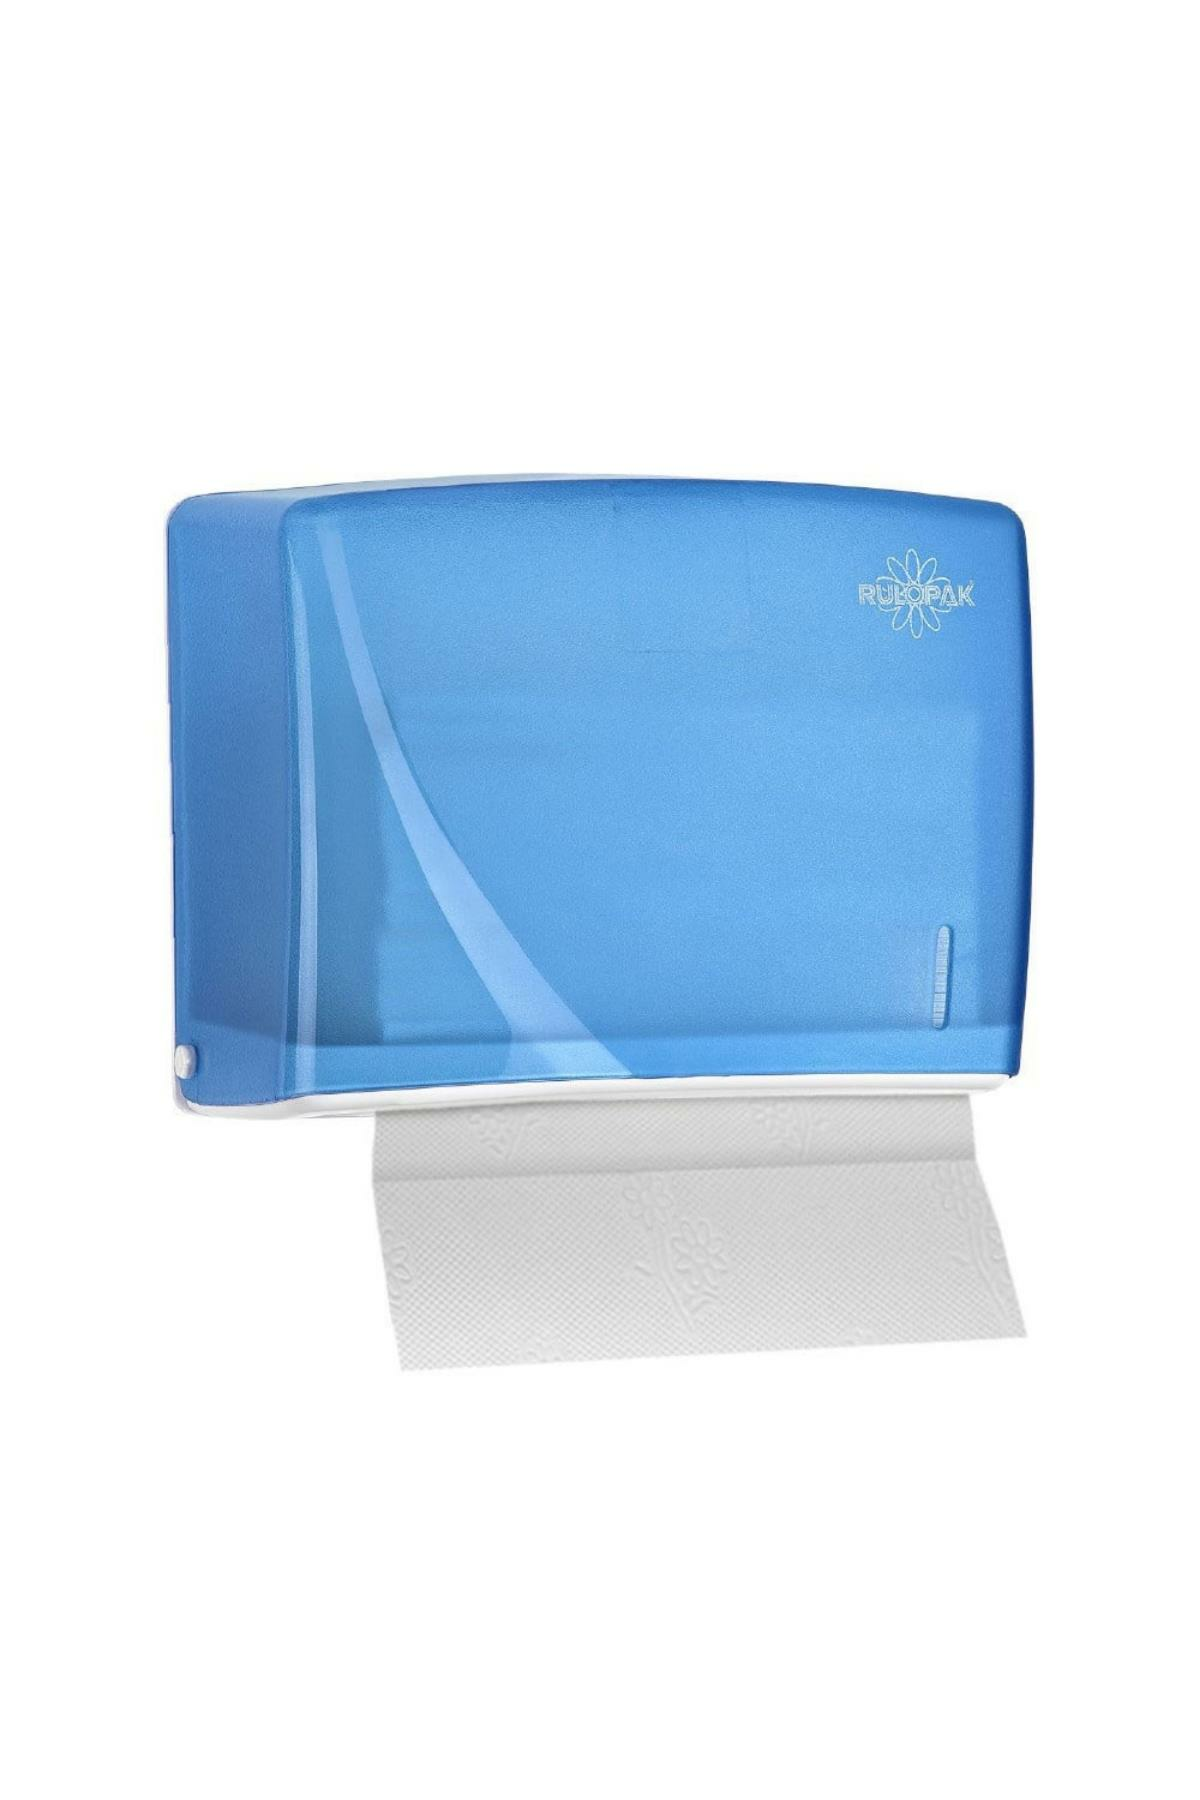 Rulopak Modern C-V Katlama Kağıt Havlu Dispenseri 200'Lü Transparan Mavi